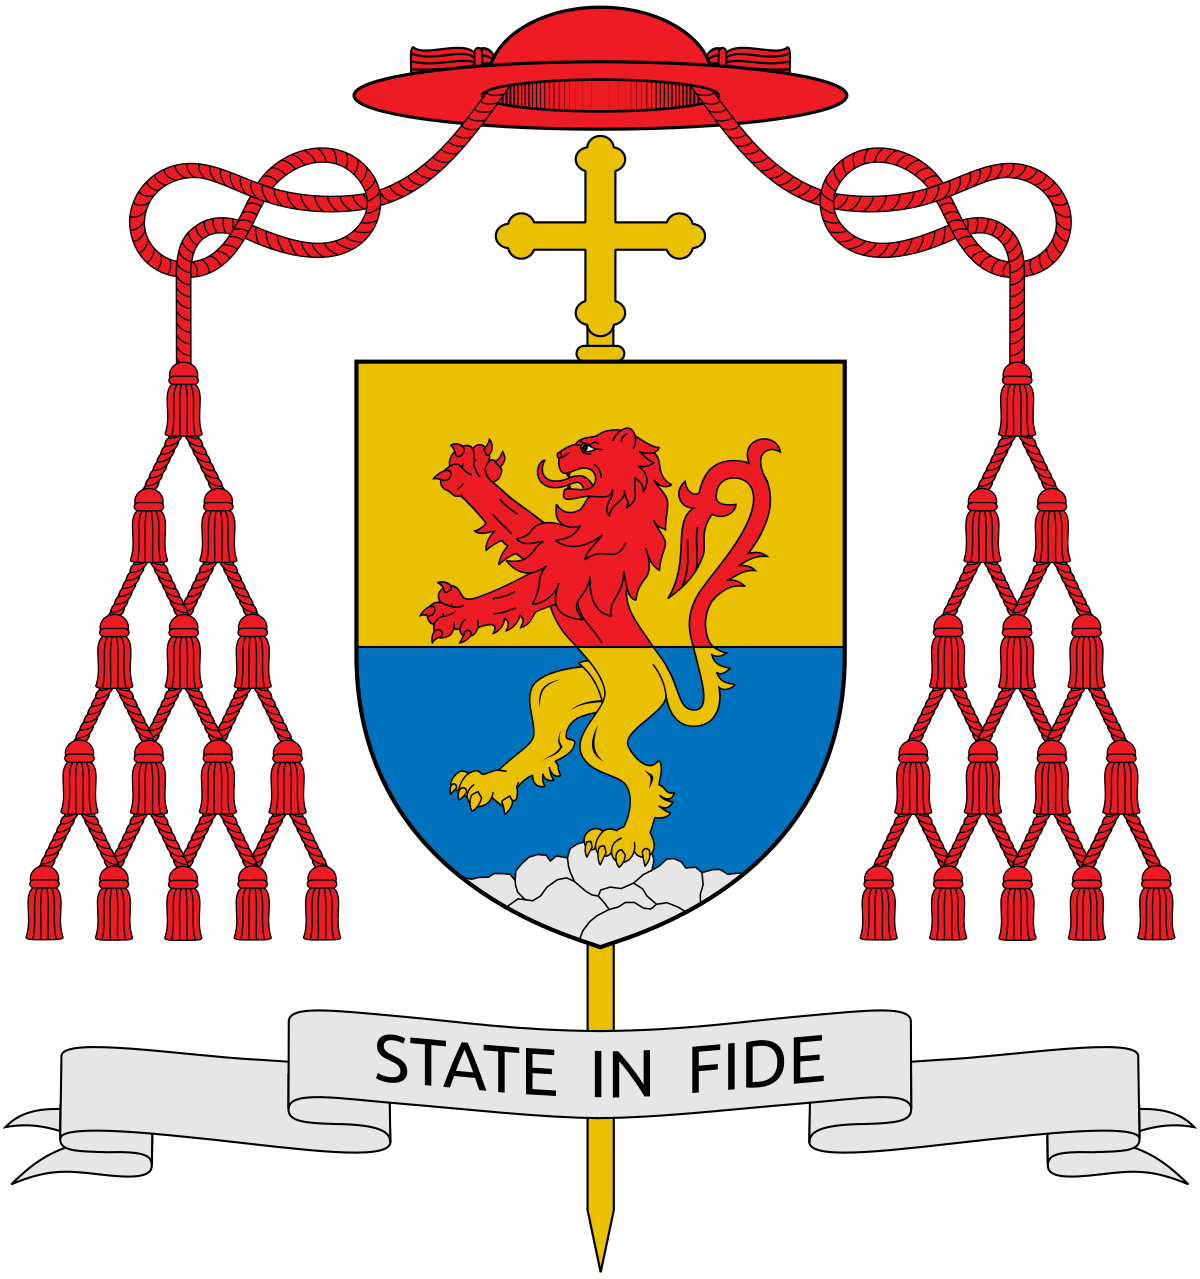 The Coat of Arms of Jean Louis Tauran, Cardinal Camerlengo